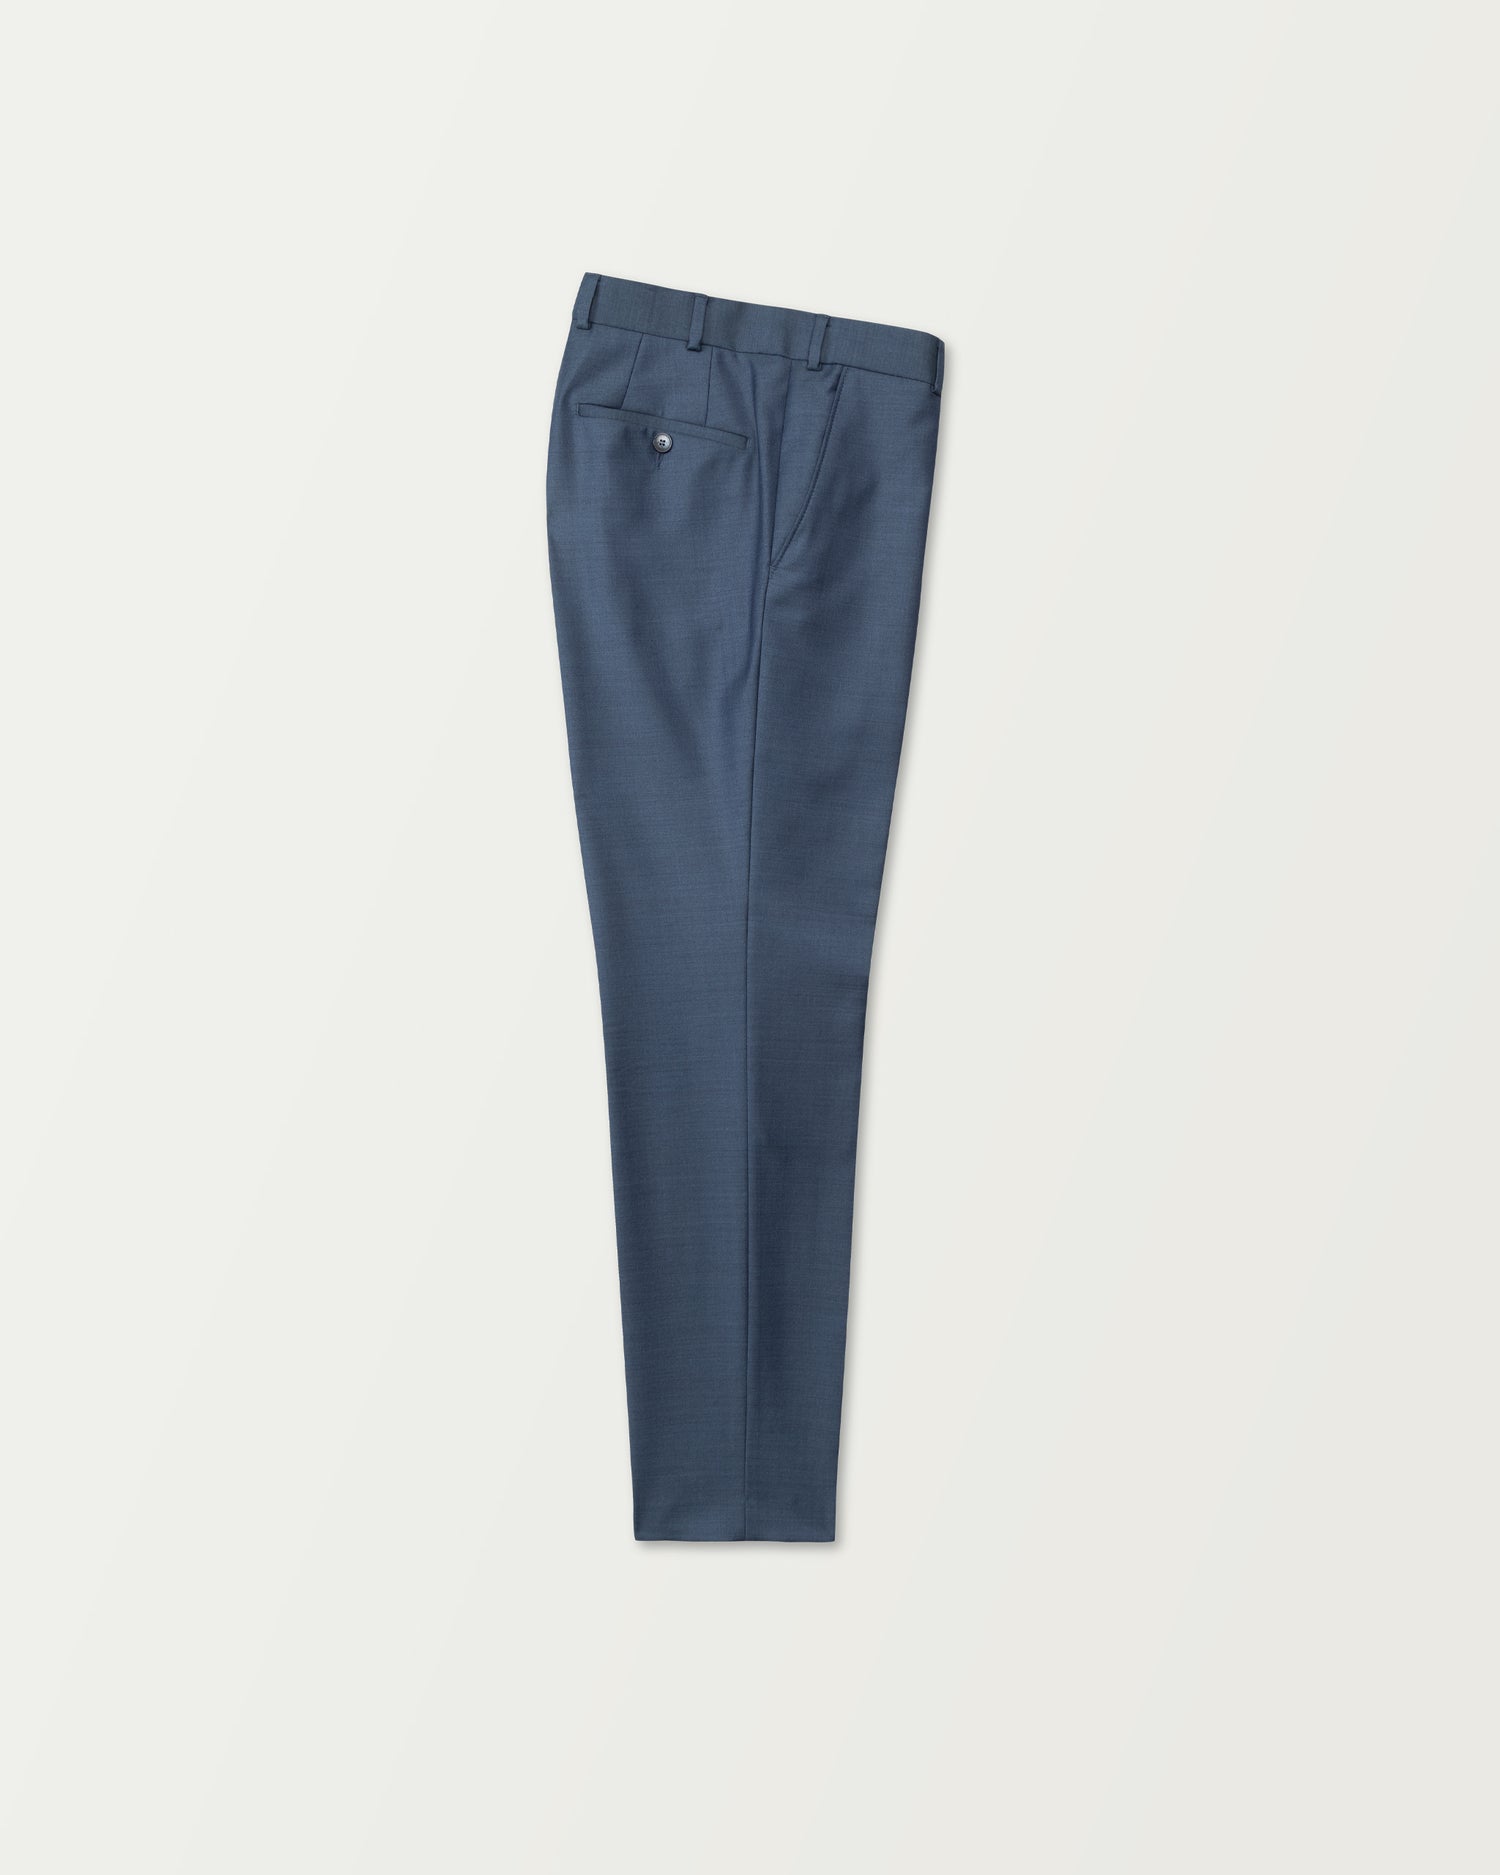 Blue Premium Wool Suit in Slim Fit (8636001452362)